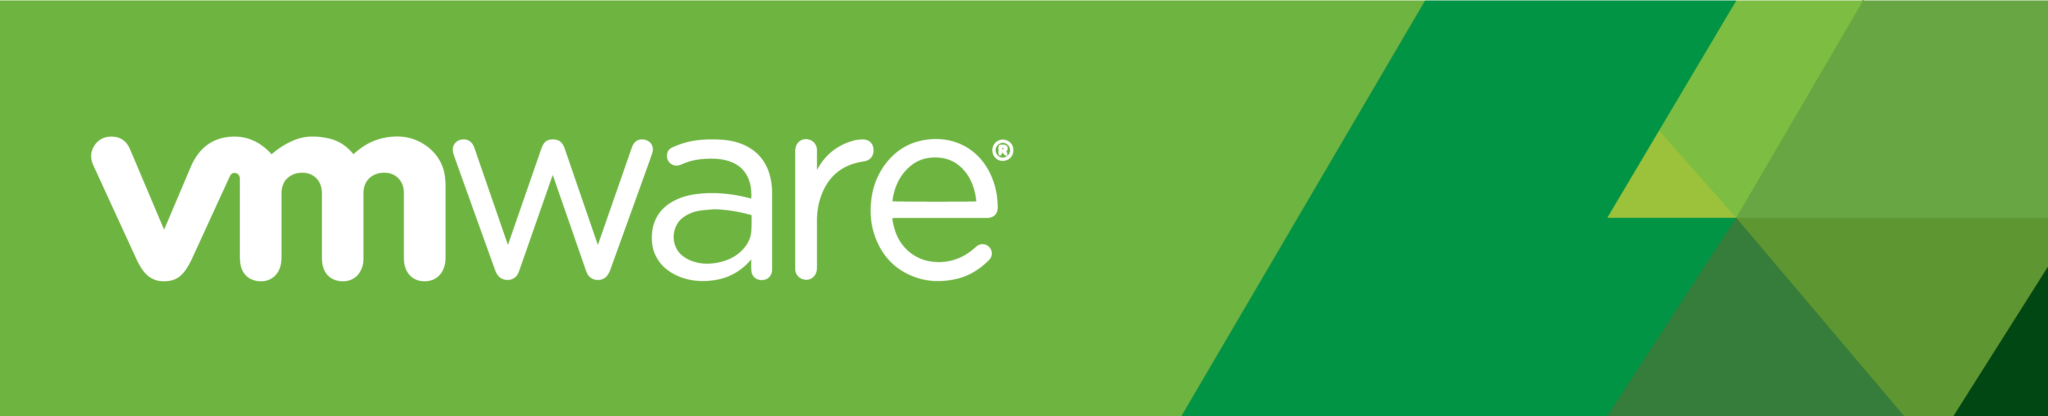 Image of green VMware banner